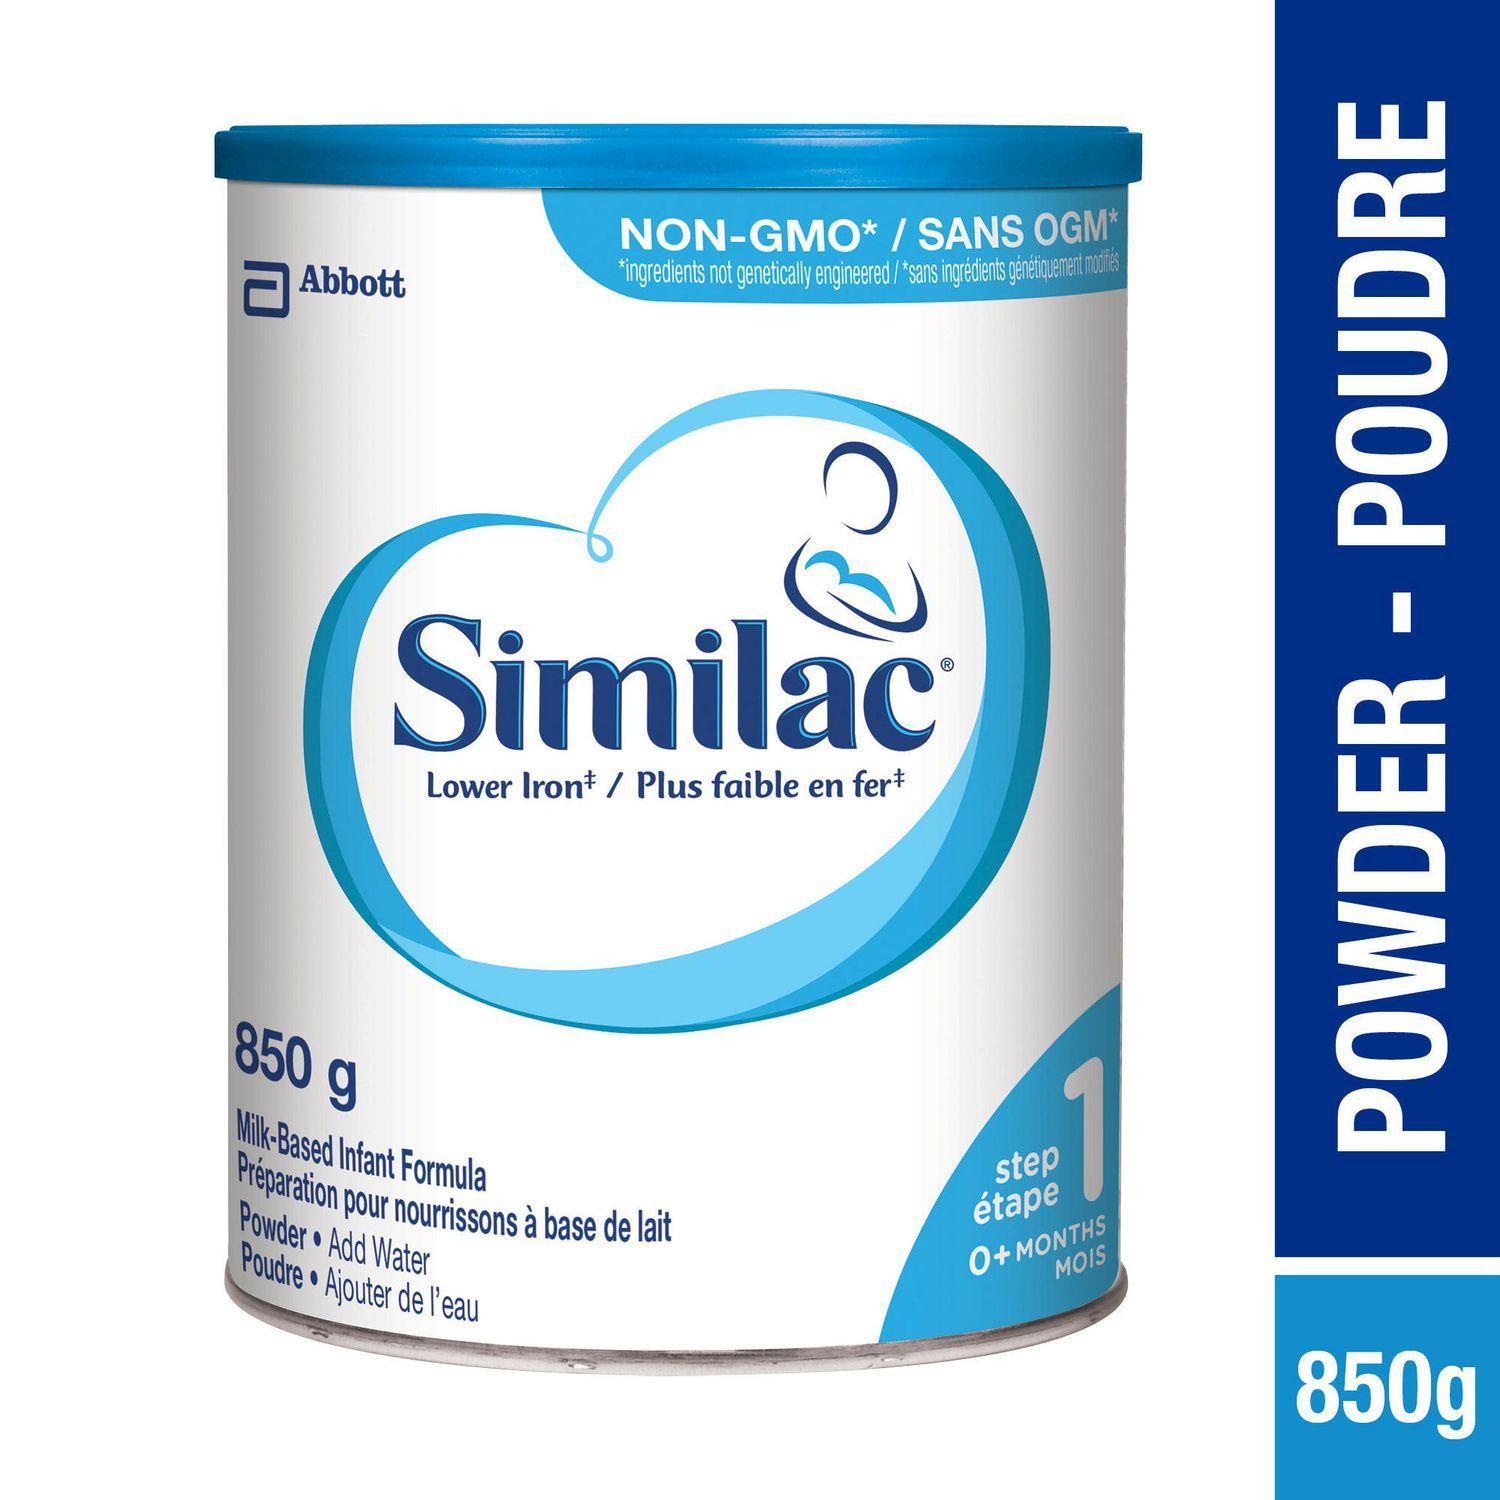 Similac Logo - Similac Lower Iron Non-GMO Baby Formula Powder, 850 g